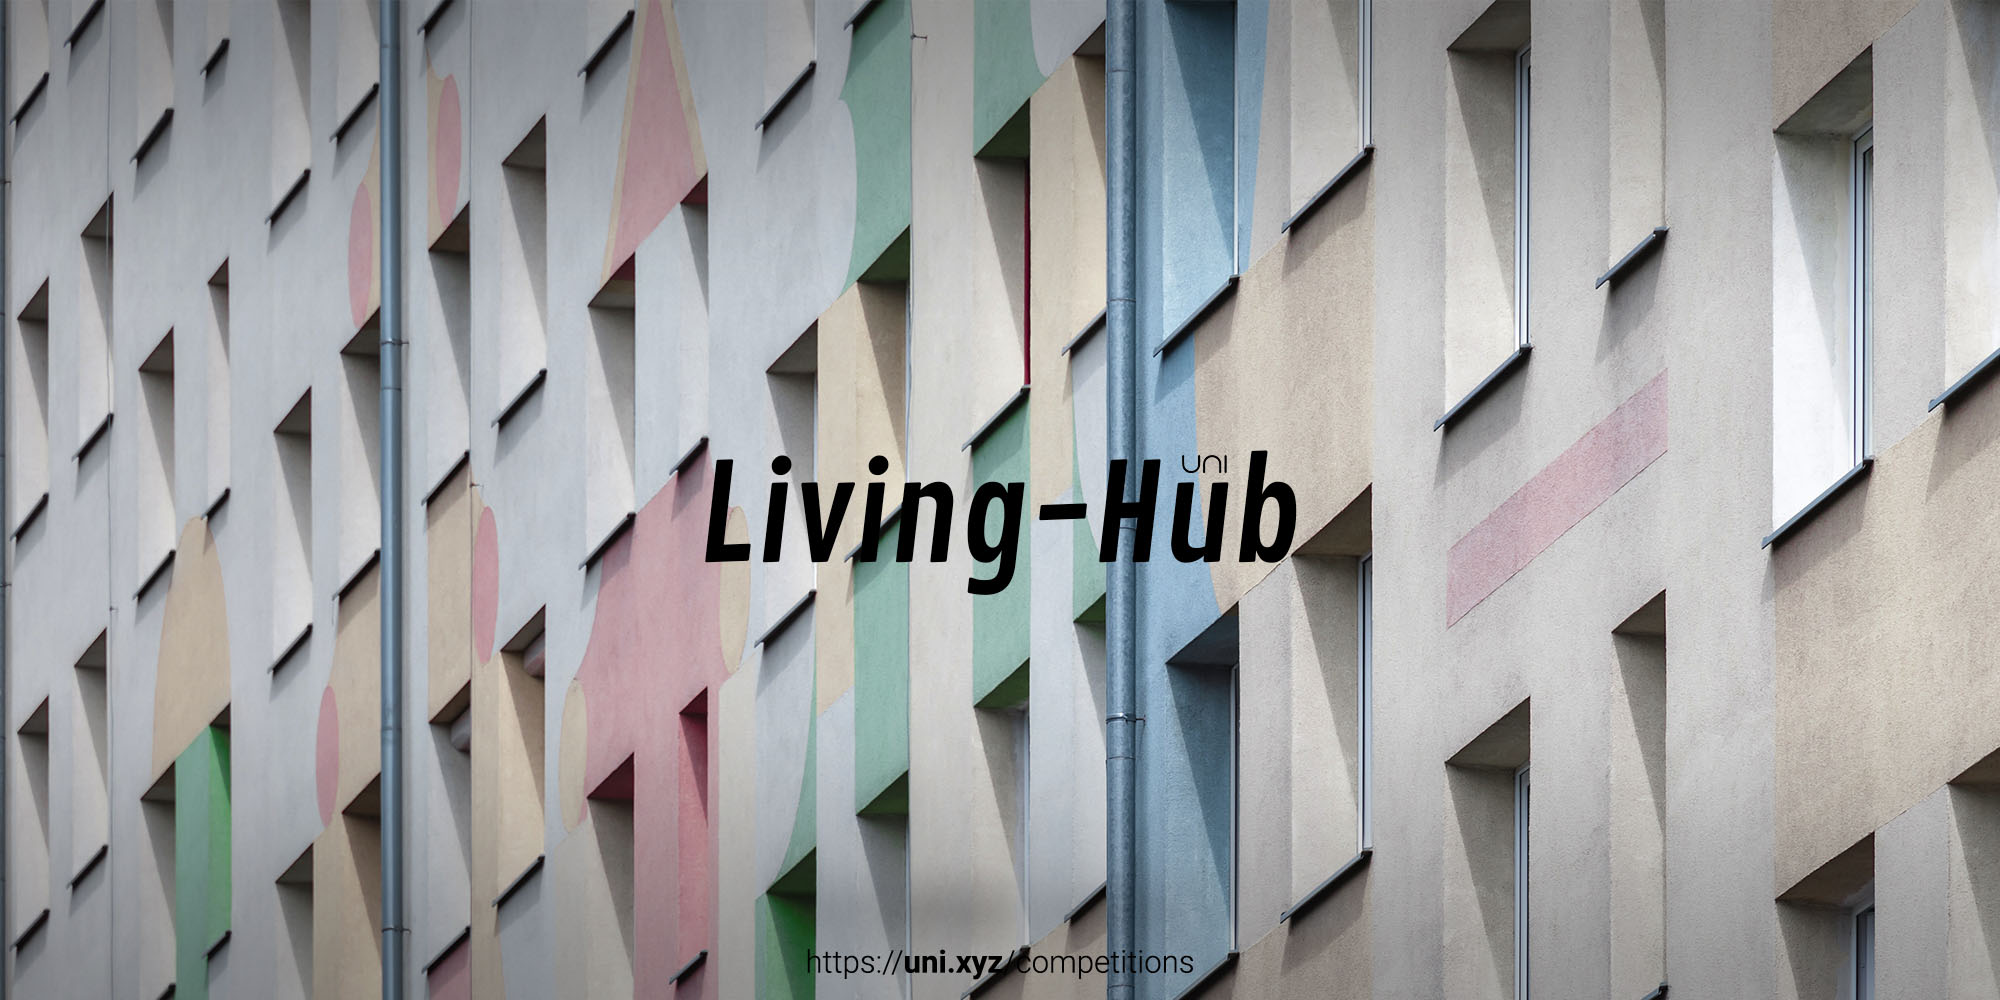 UNI announces Living hub Hub - Architecture Competition 2022